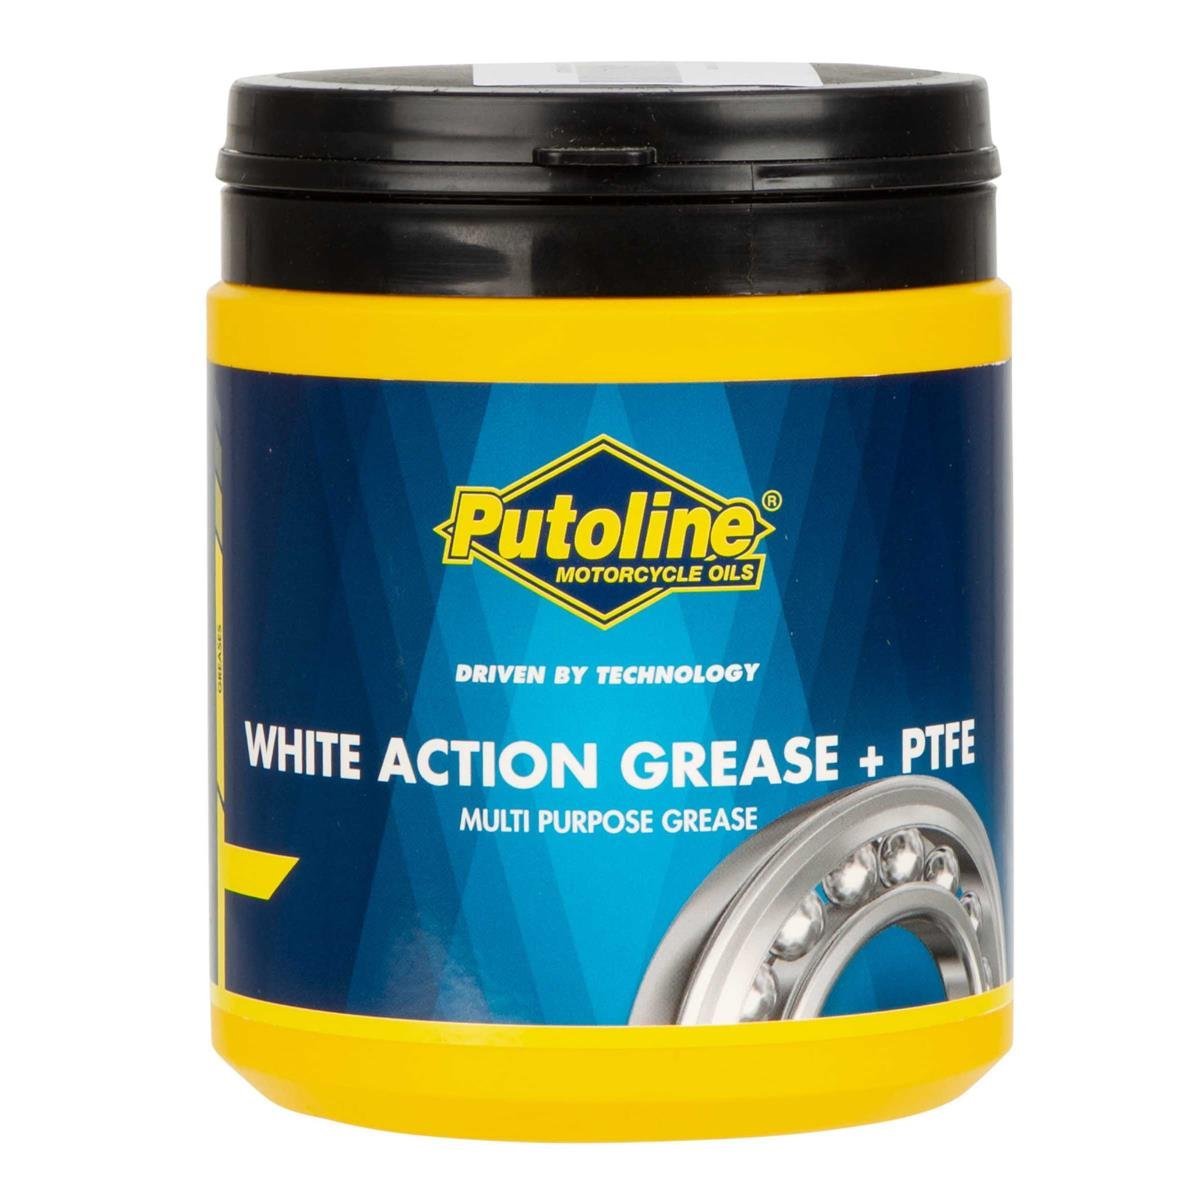 Putoline Graisse + PTFE White Action 600 g